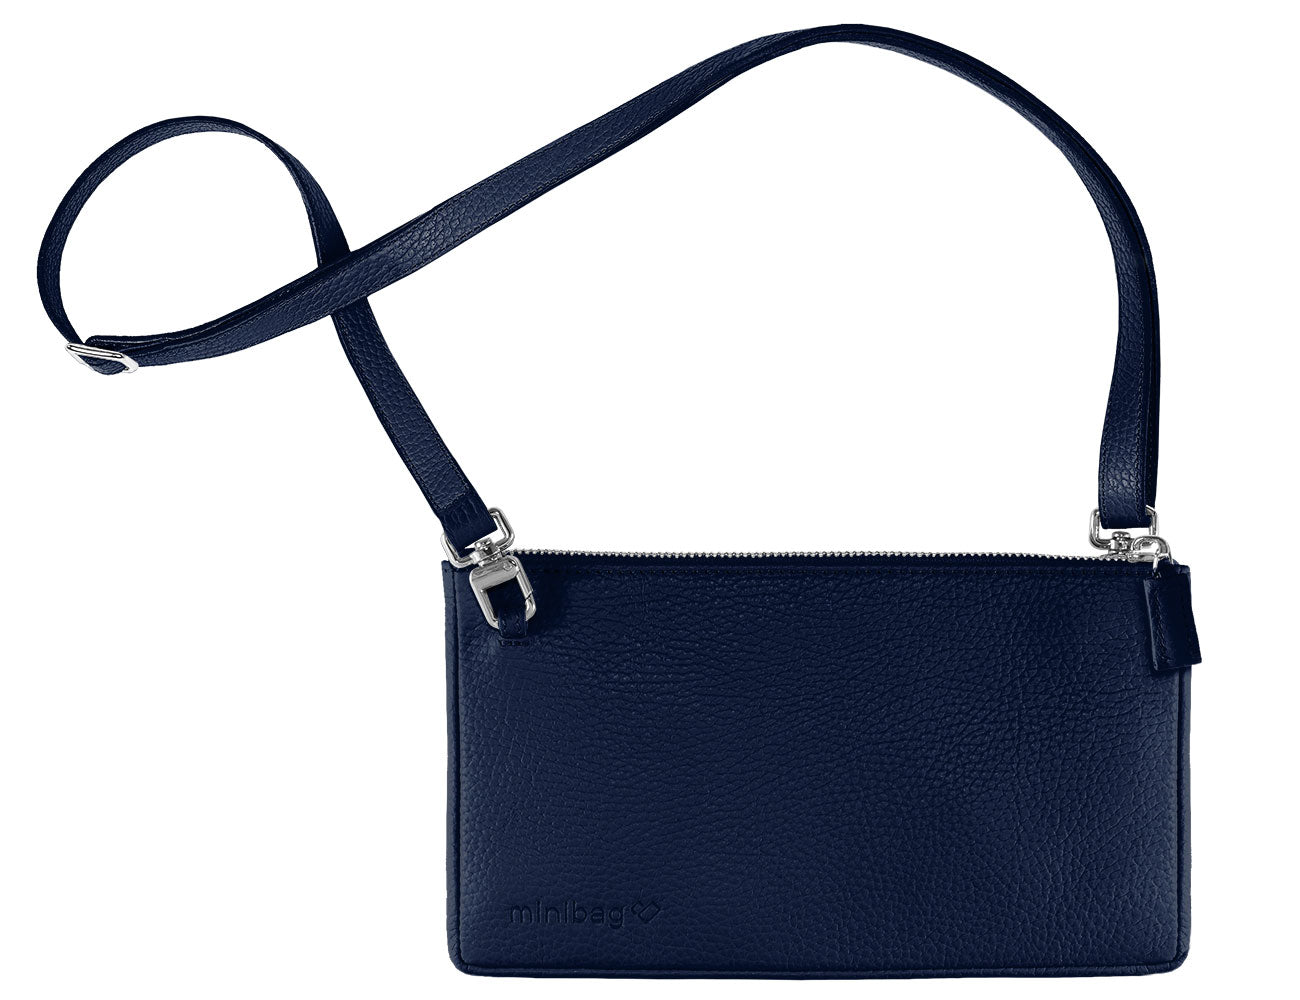 minibag navy, Ledertasche dunkelblau, Geldtasche zum Umhängen, Umhängetasche dunkelblau, minibag